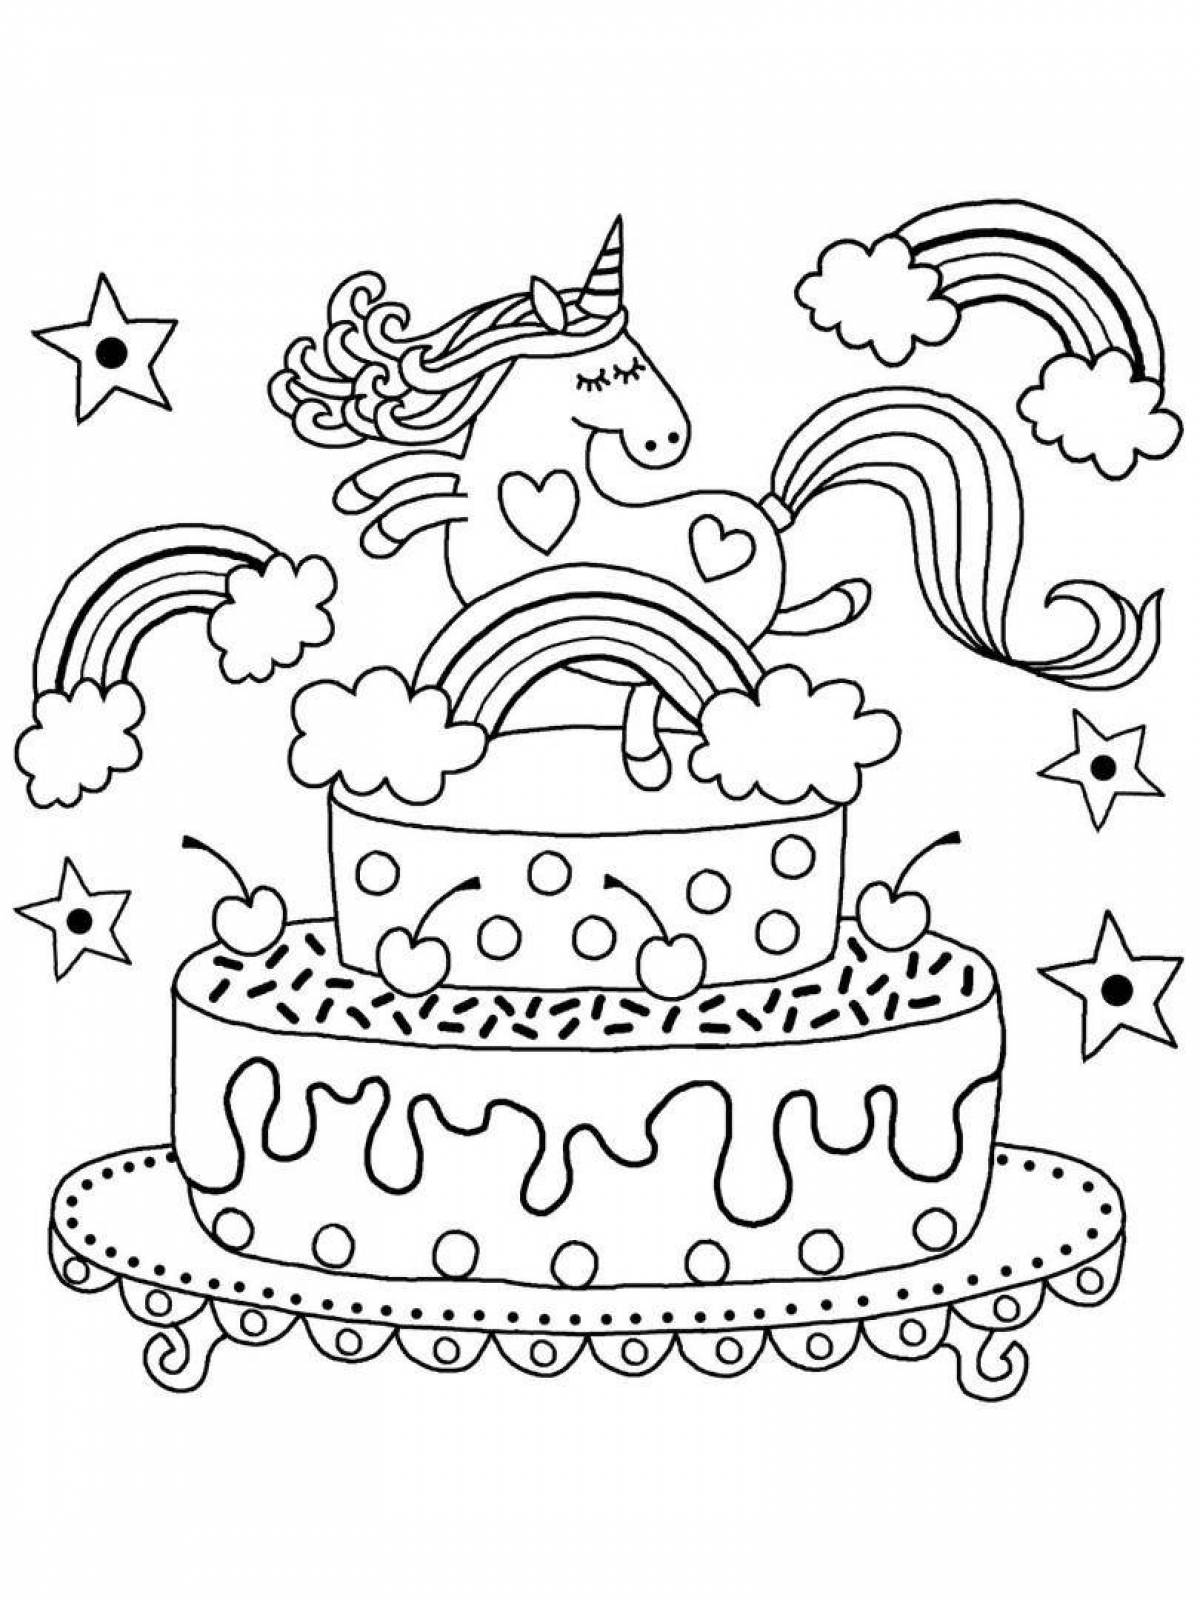 Unicorn cake coloring book